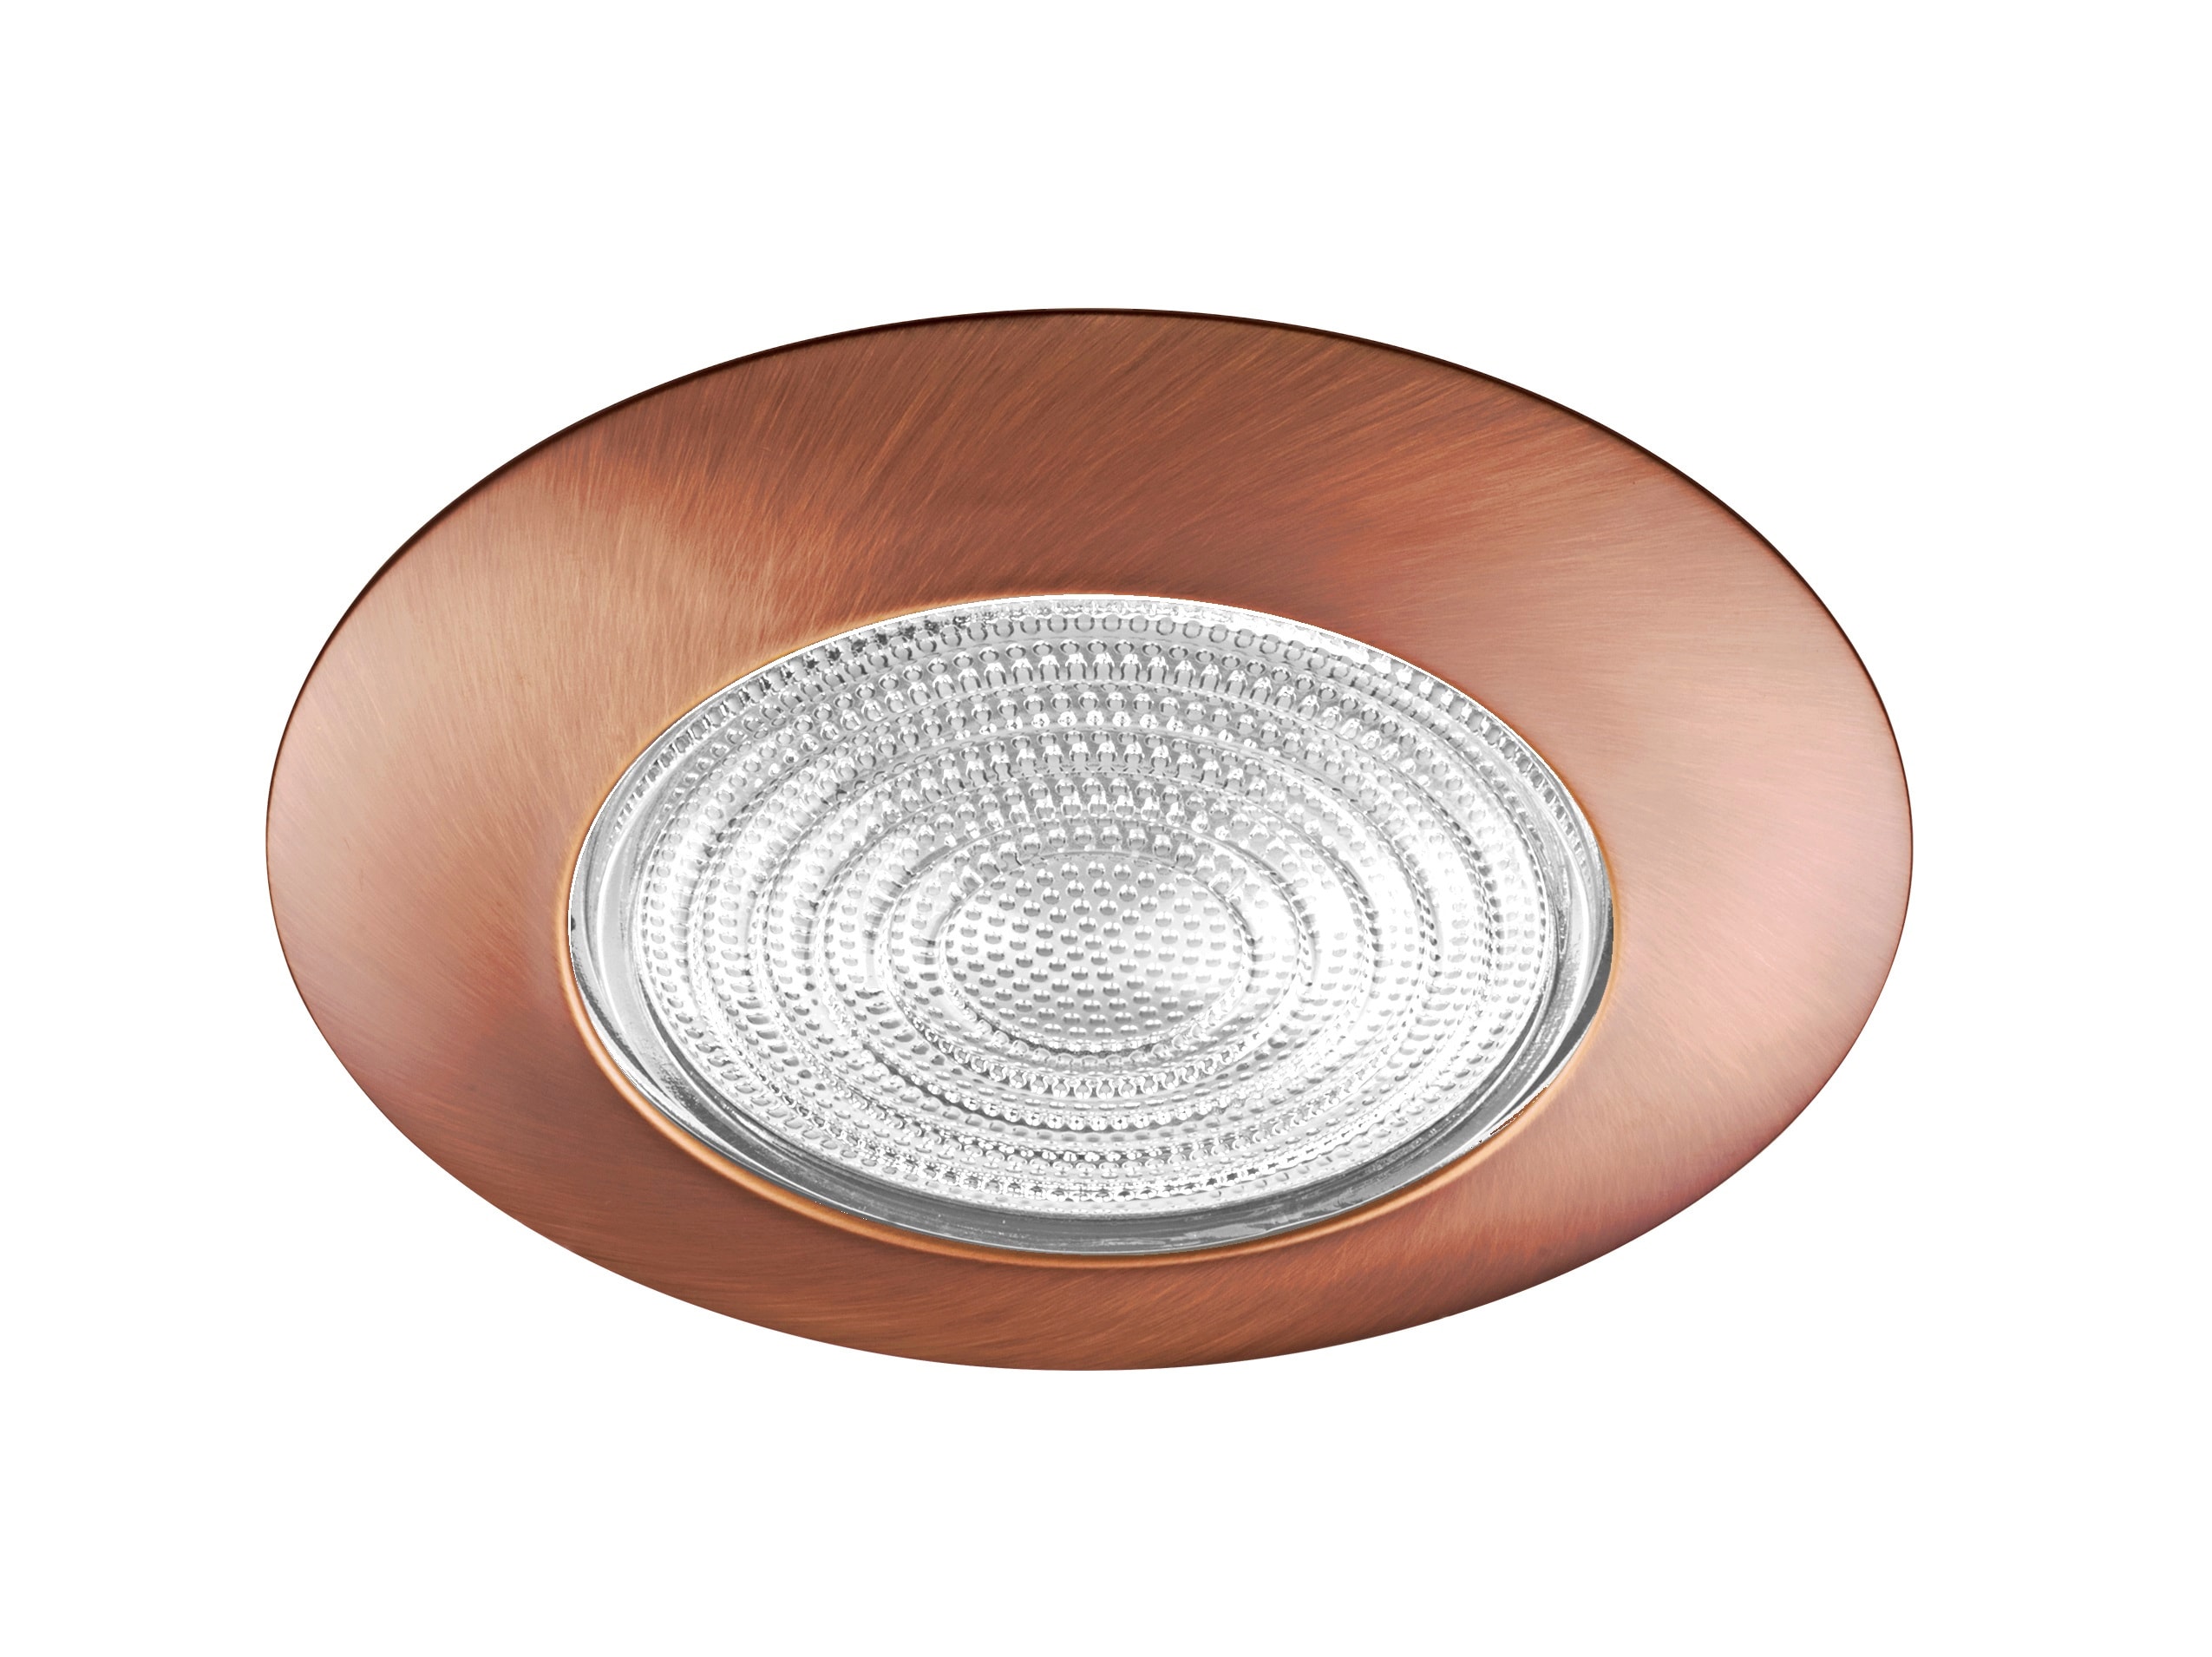 Bronze NICOR Lighting 6-Inch Lexan Shower Trim with Fresnel Lens 